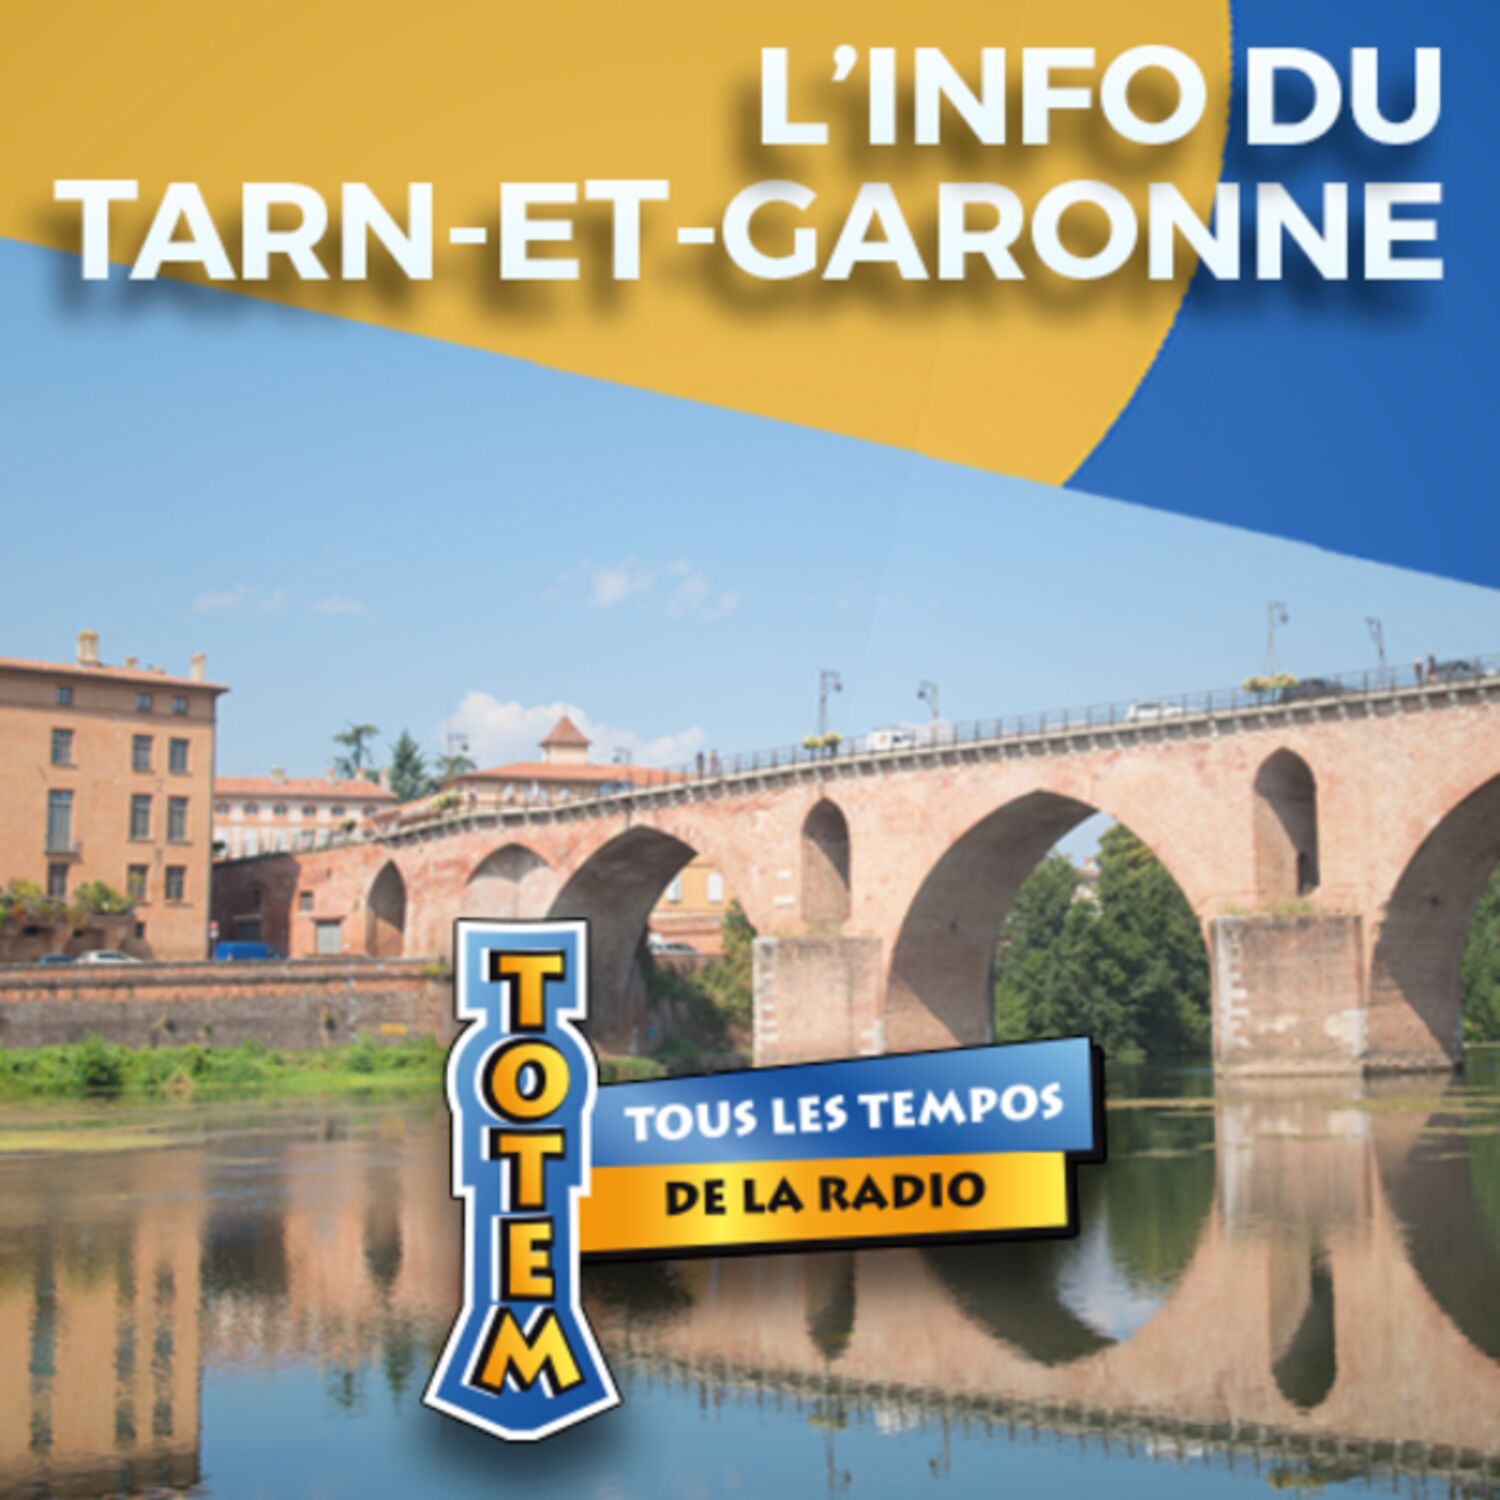 L'info du Tarn-et-Garonne du 29/04/23 à 11h59